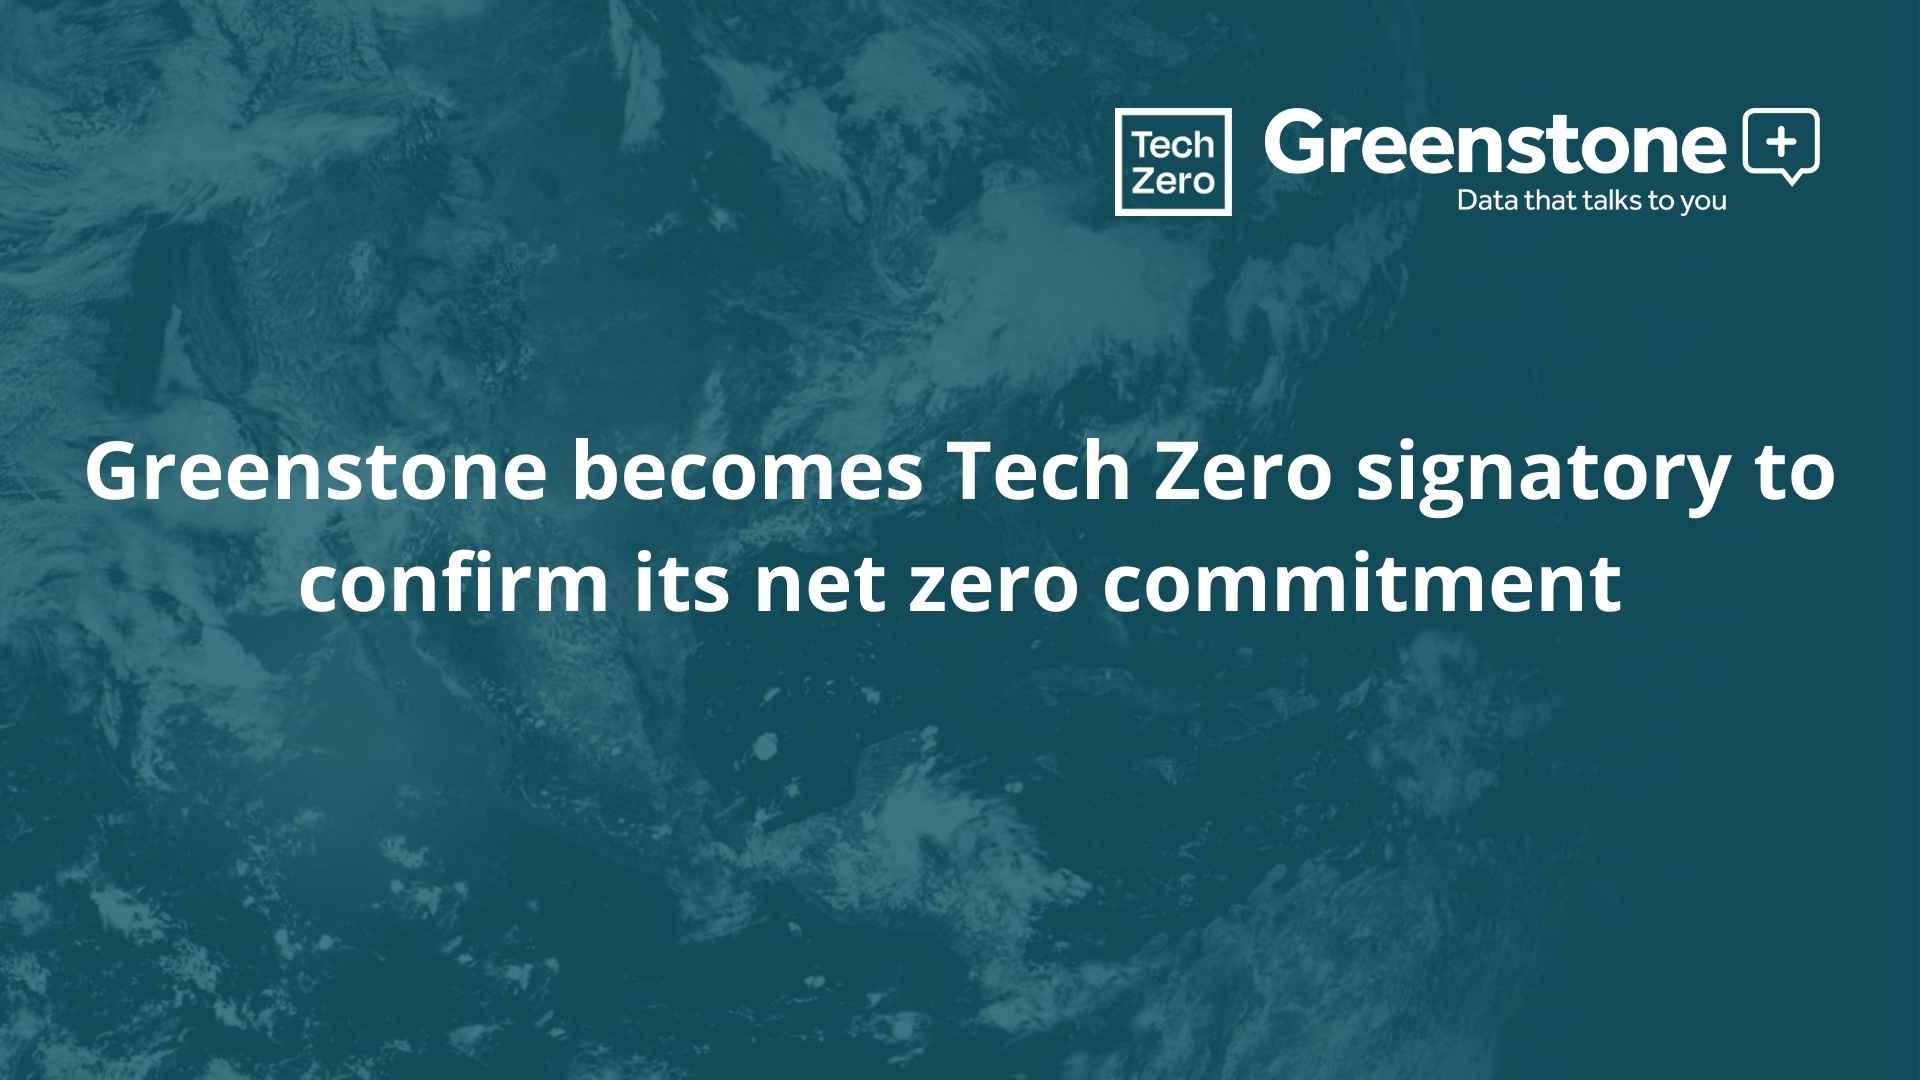 Greenstone becomes Tech Zero signatory to confirm net zero commitment